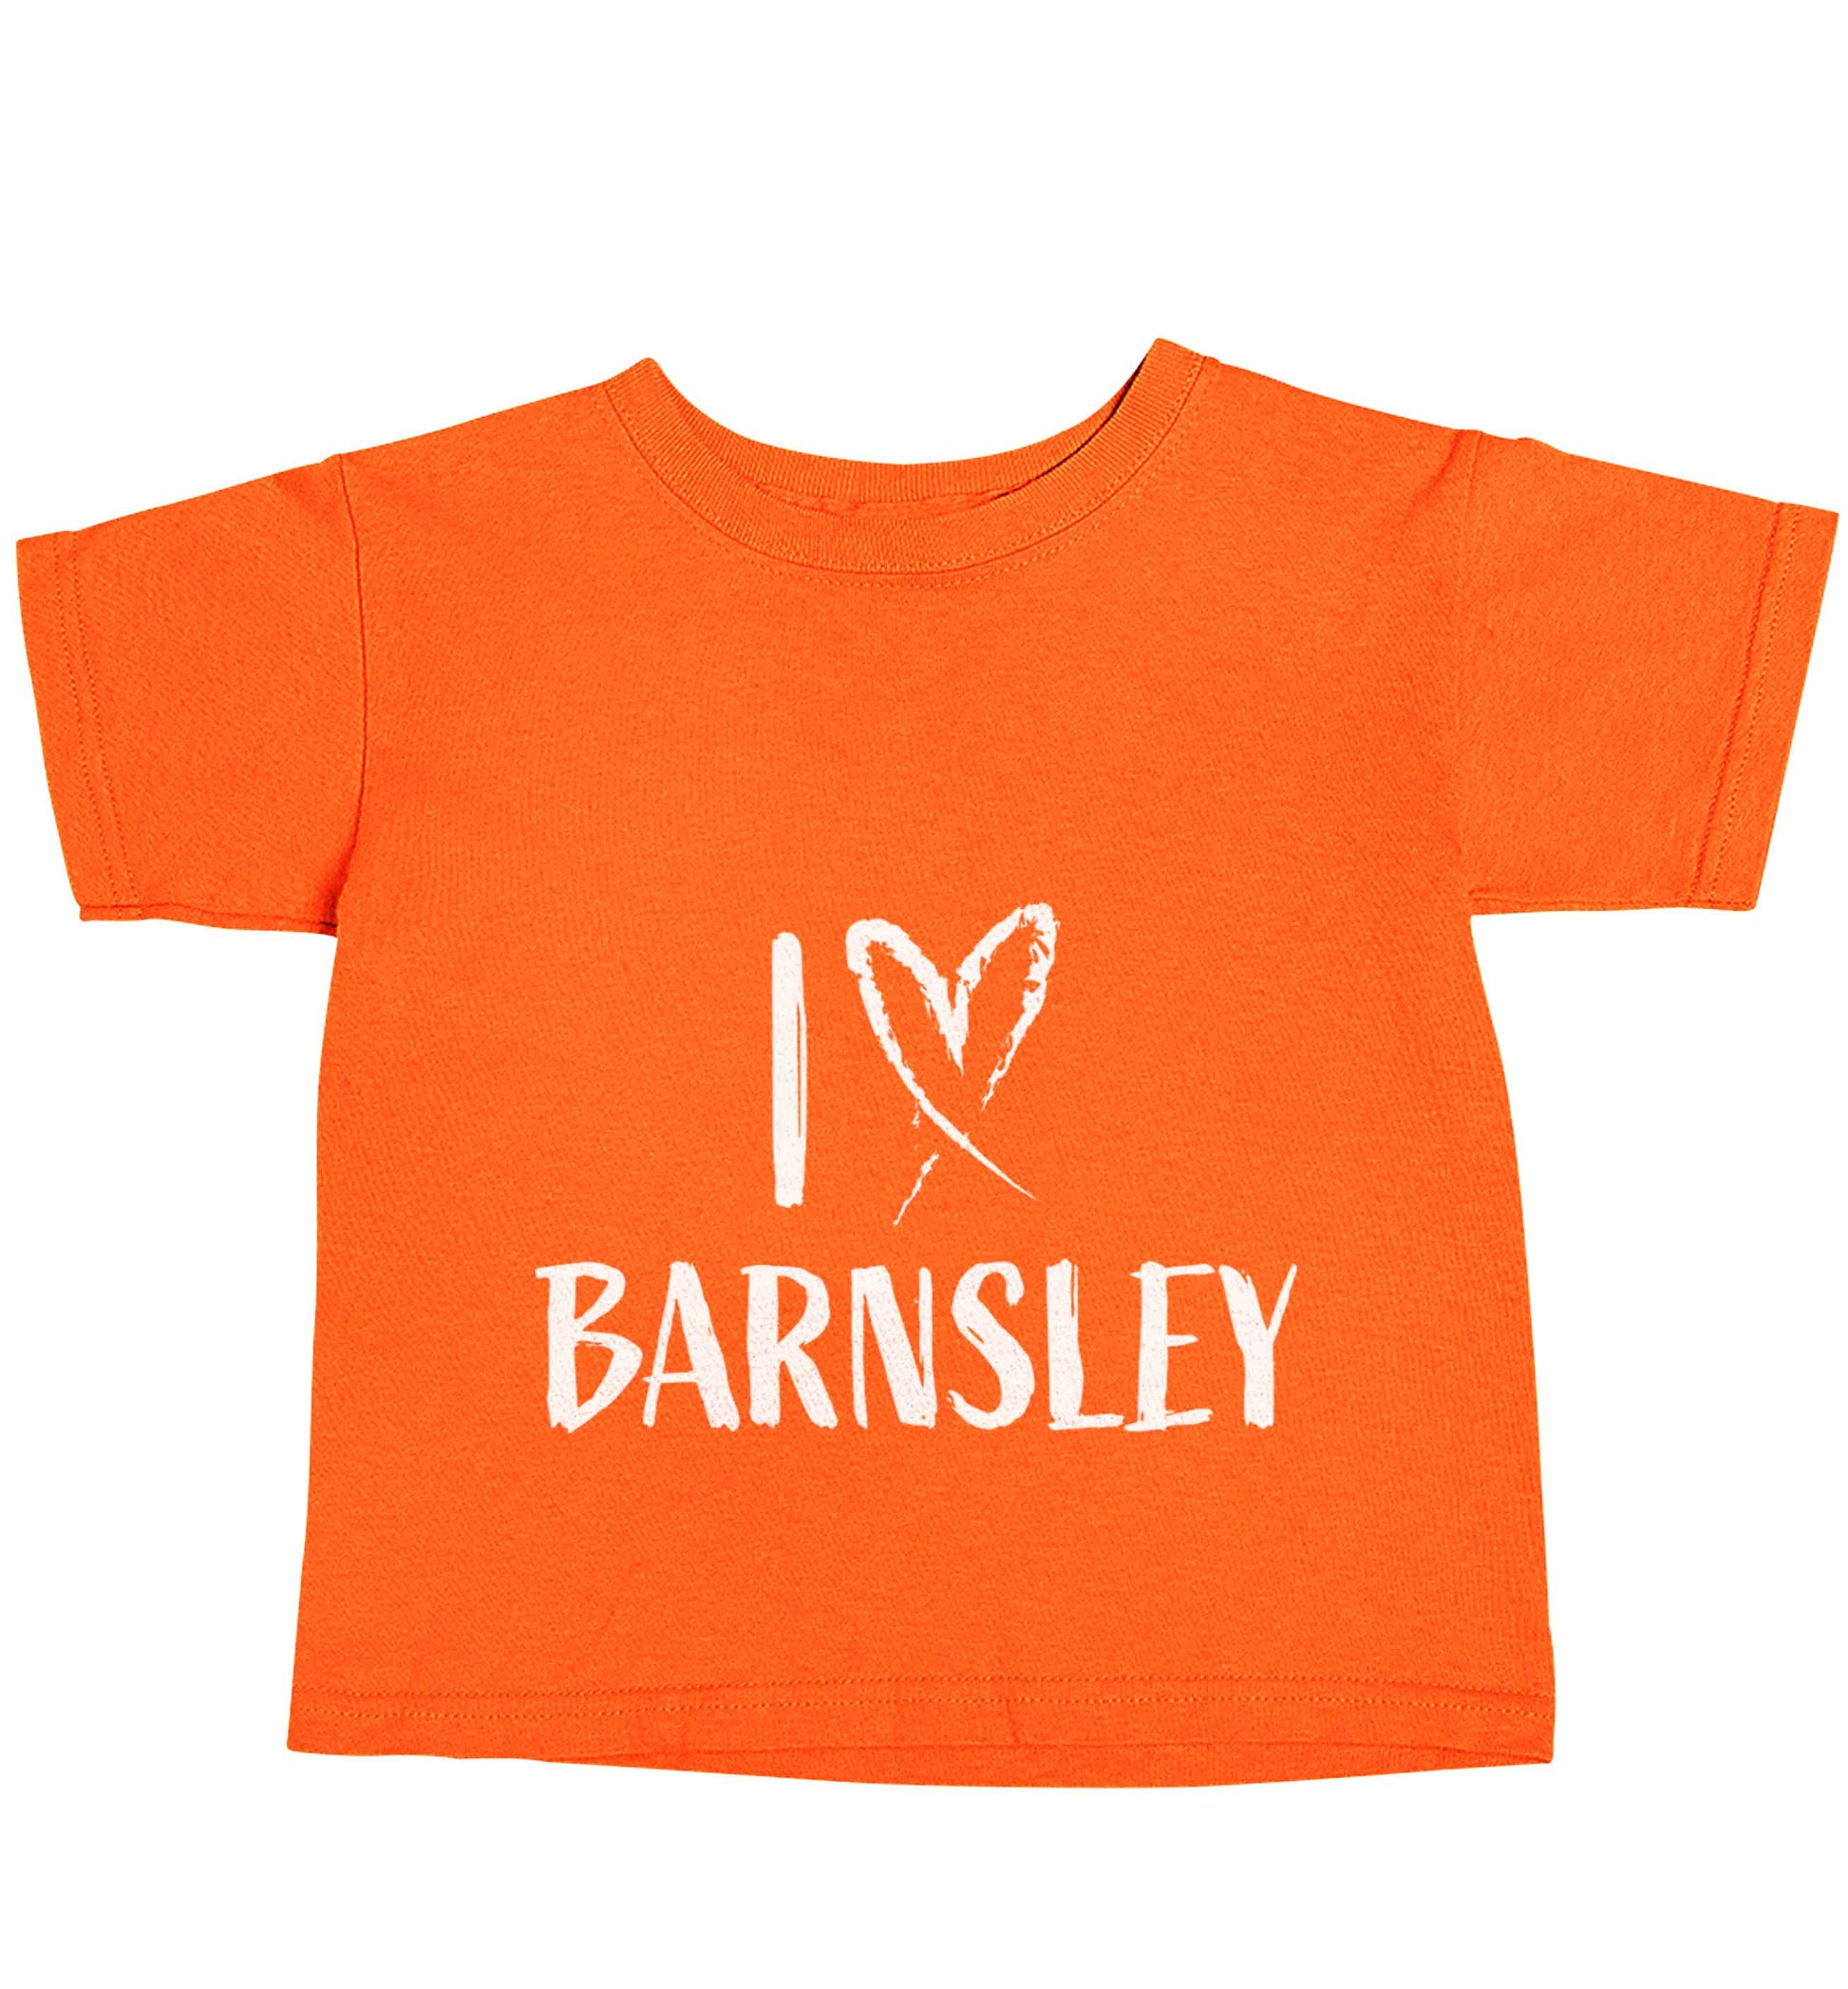 I love Barnsley orange baby toddler Tshirt 2 Years